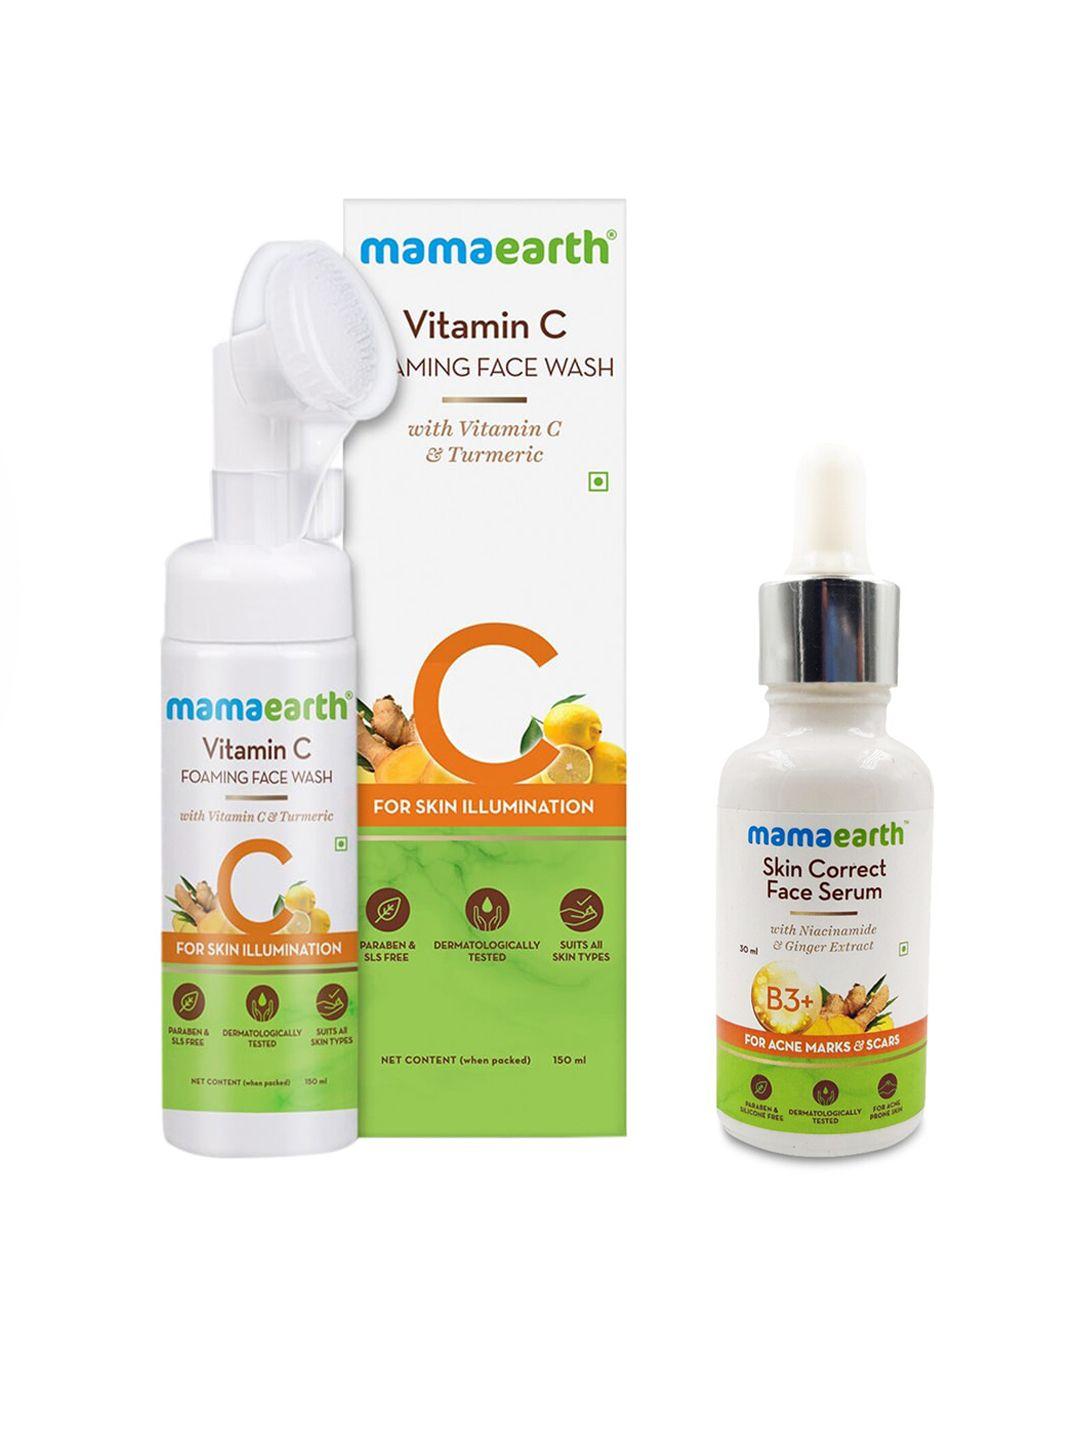 mamaearth unisex set of face wash & face serum